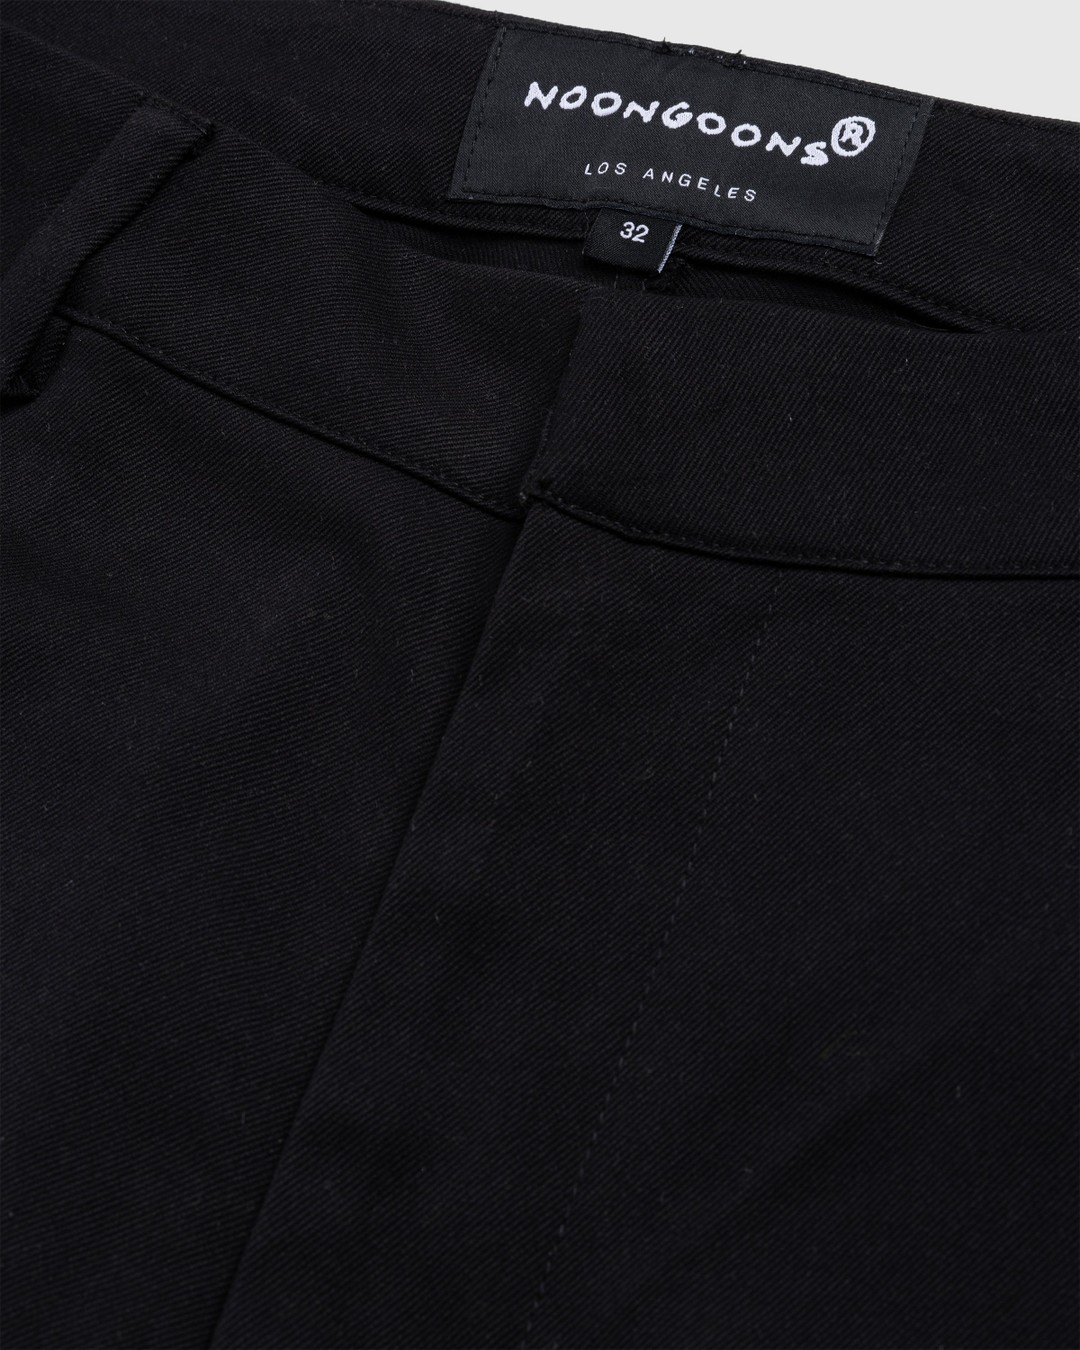 Noon Goons – Profile Pant Black - Pants - Black - Image 4